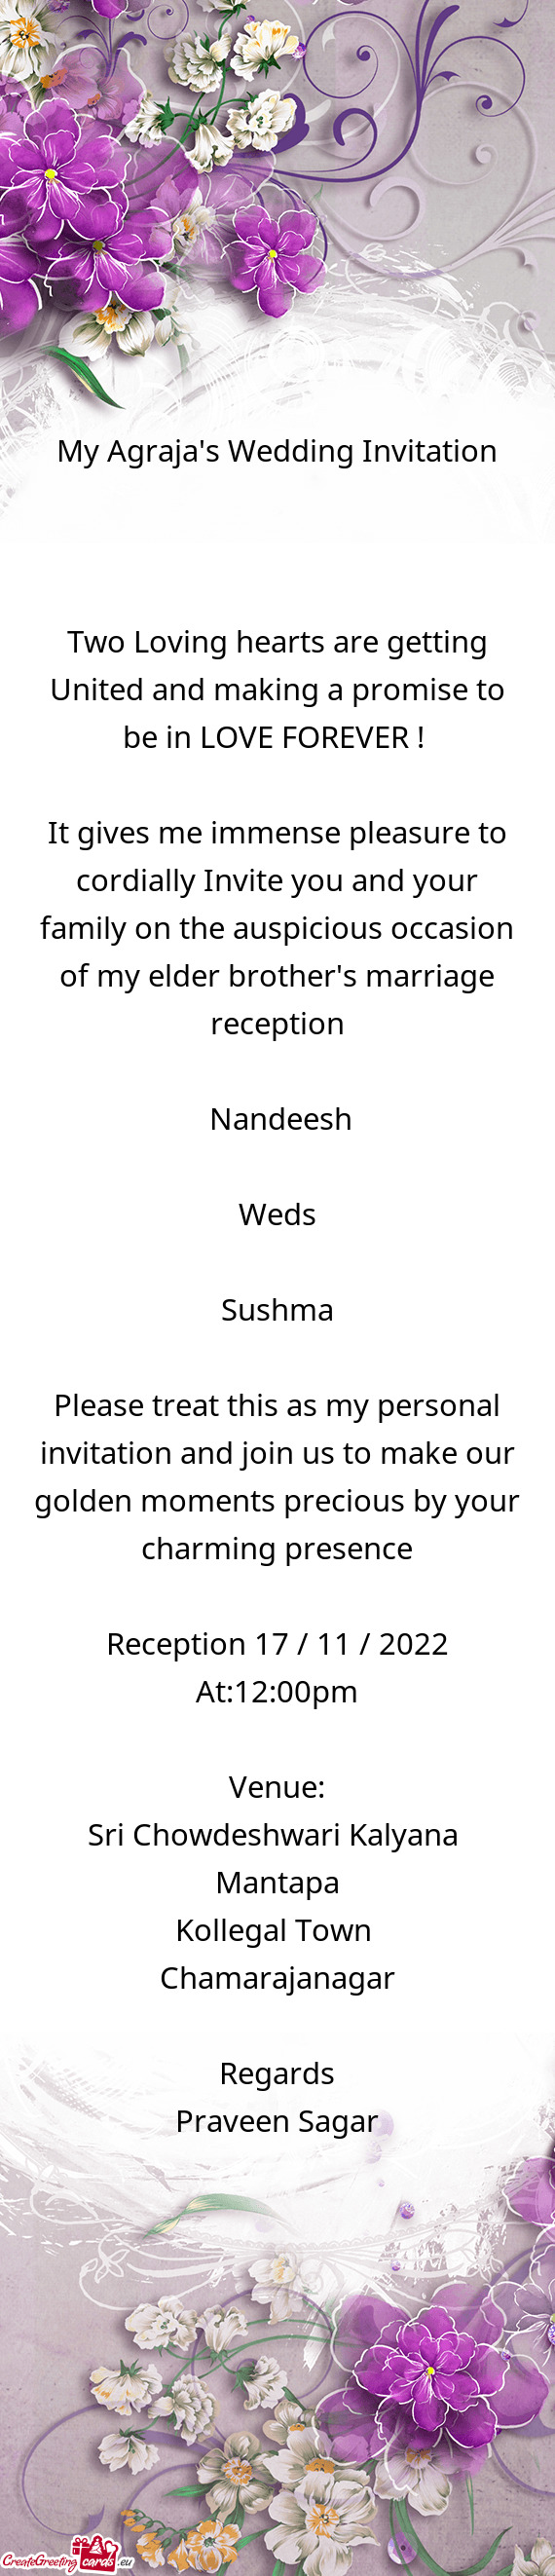 My Agraja's Wedding Invitation